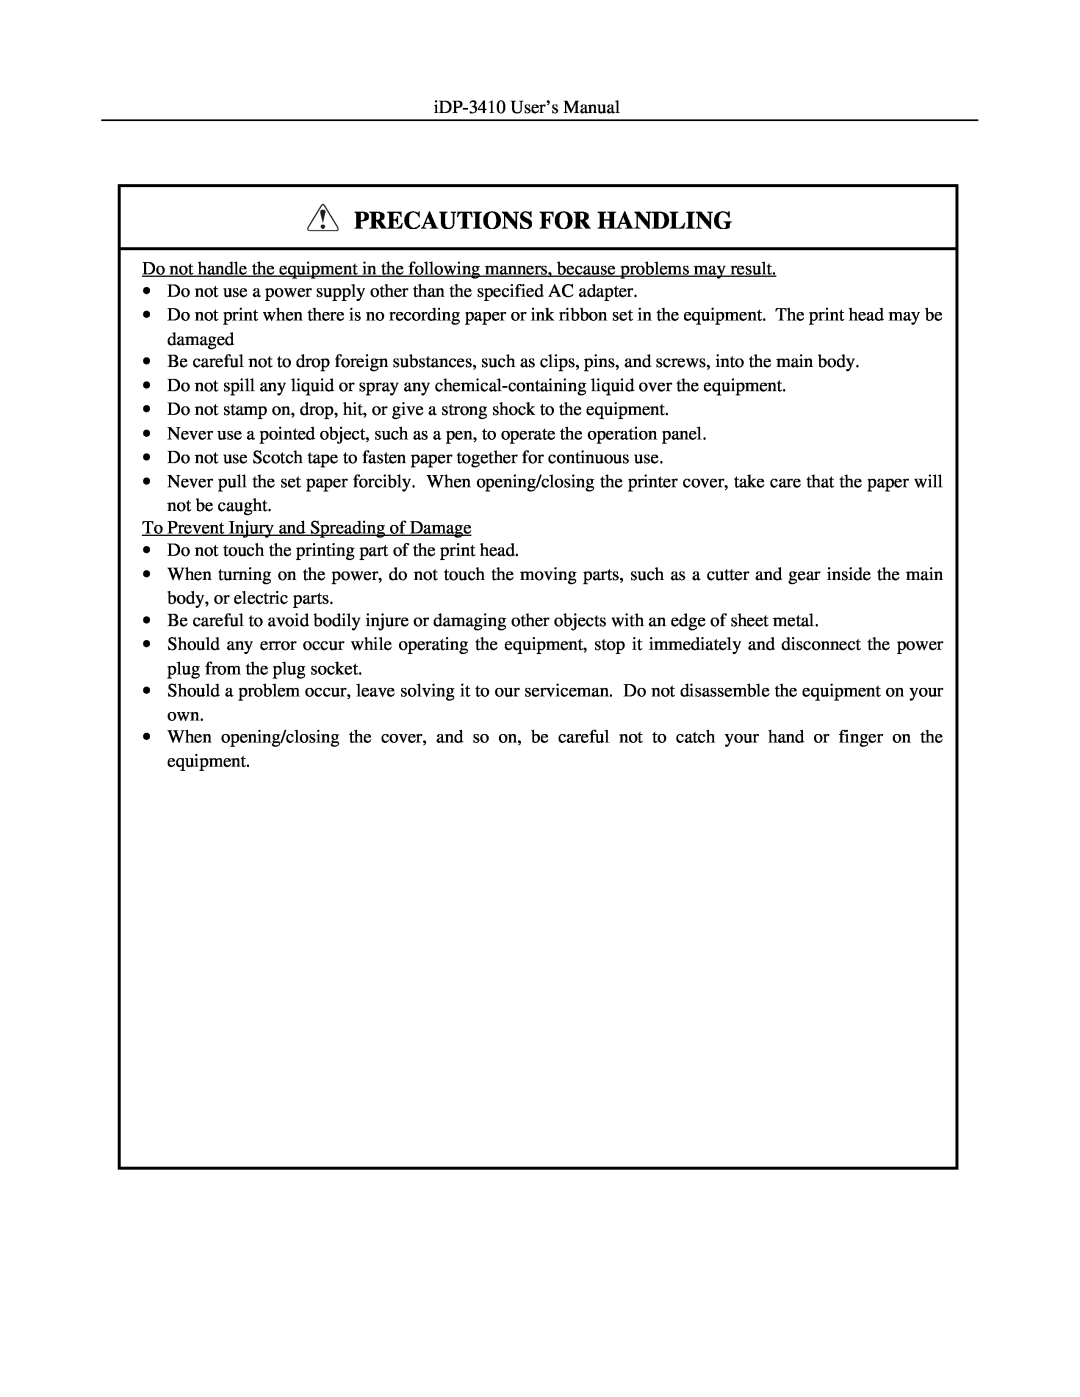 Addlogix iDP-3410 user manual Precautions For Handling 